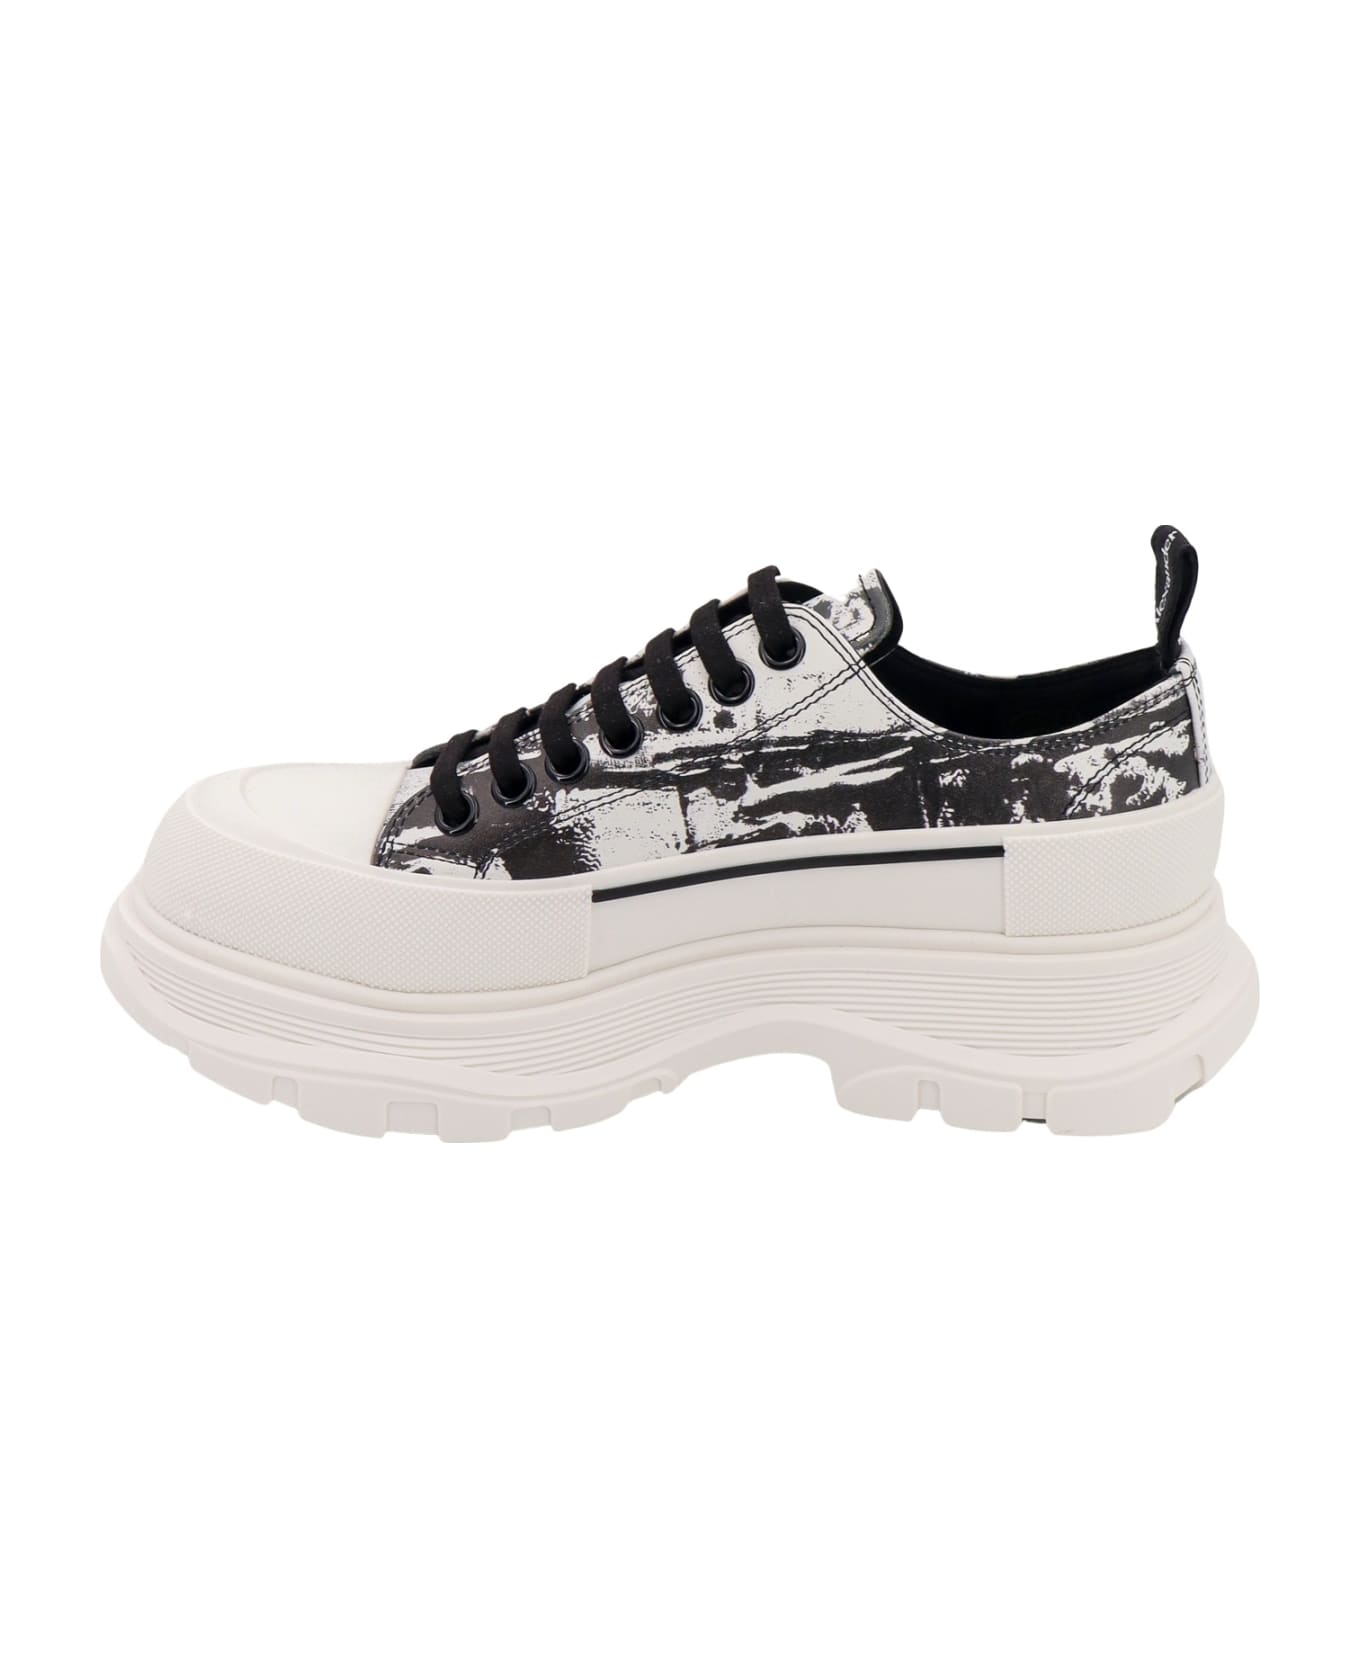 Alexander McQueen Printed Leather Tread Slick Sneakers - White